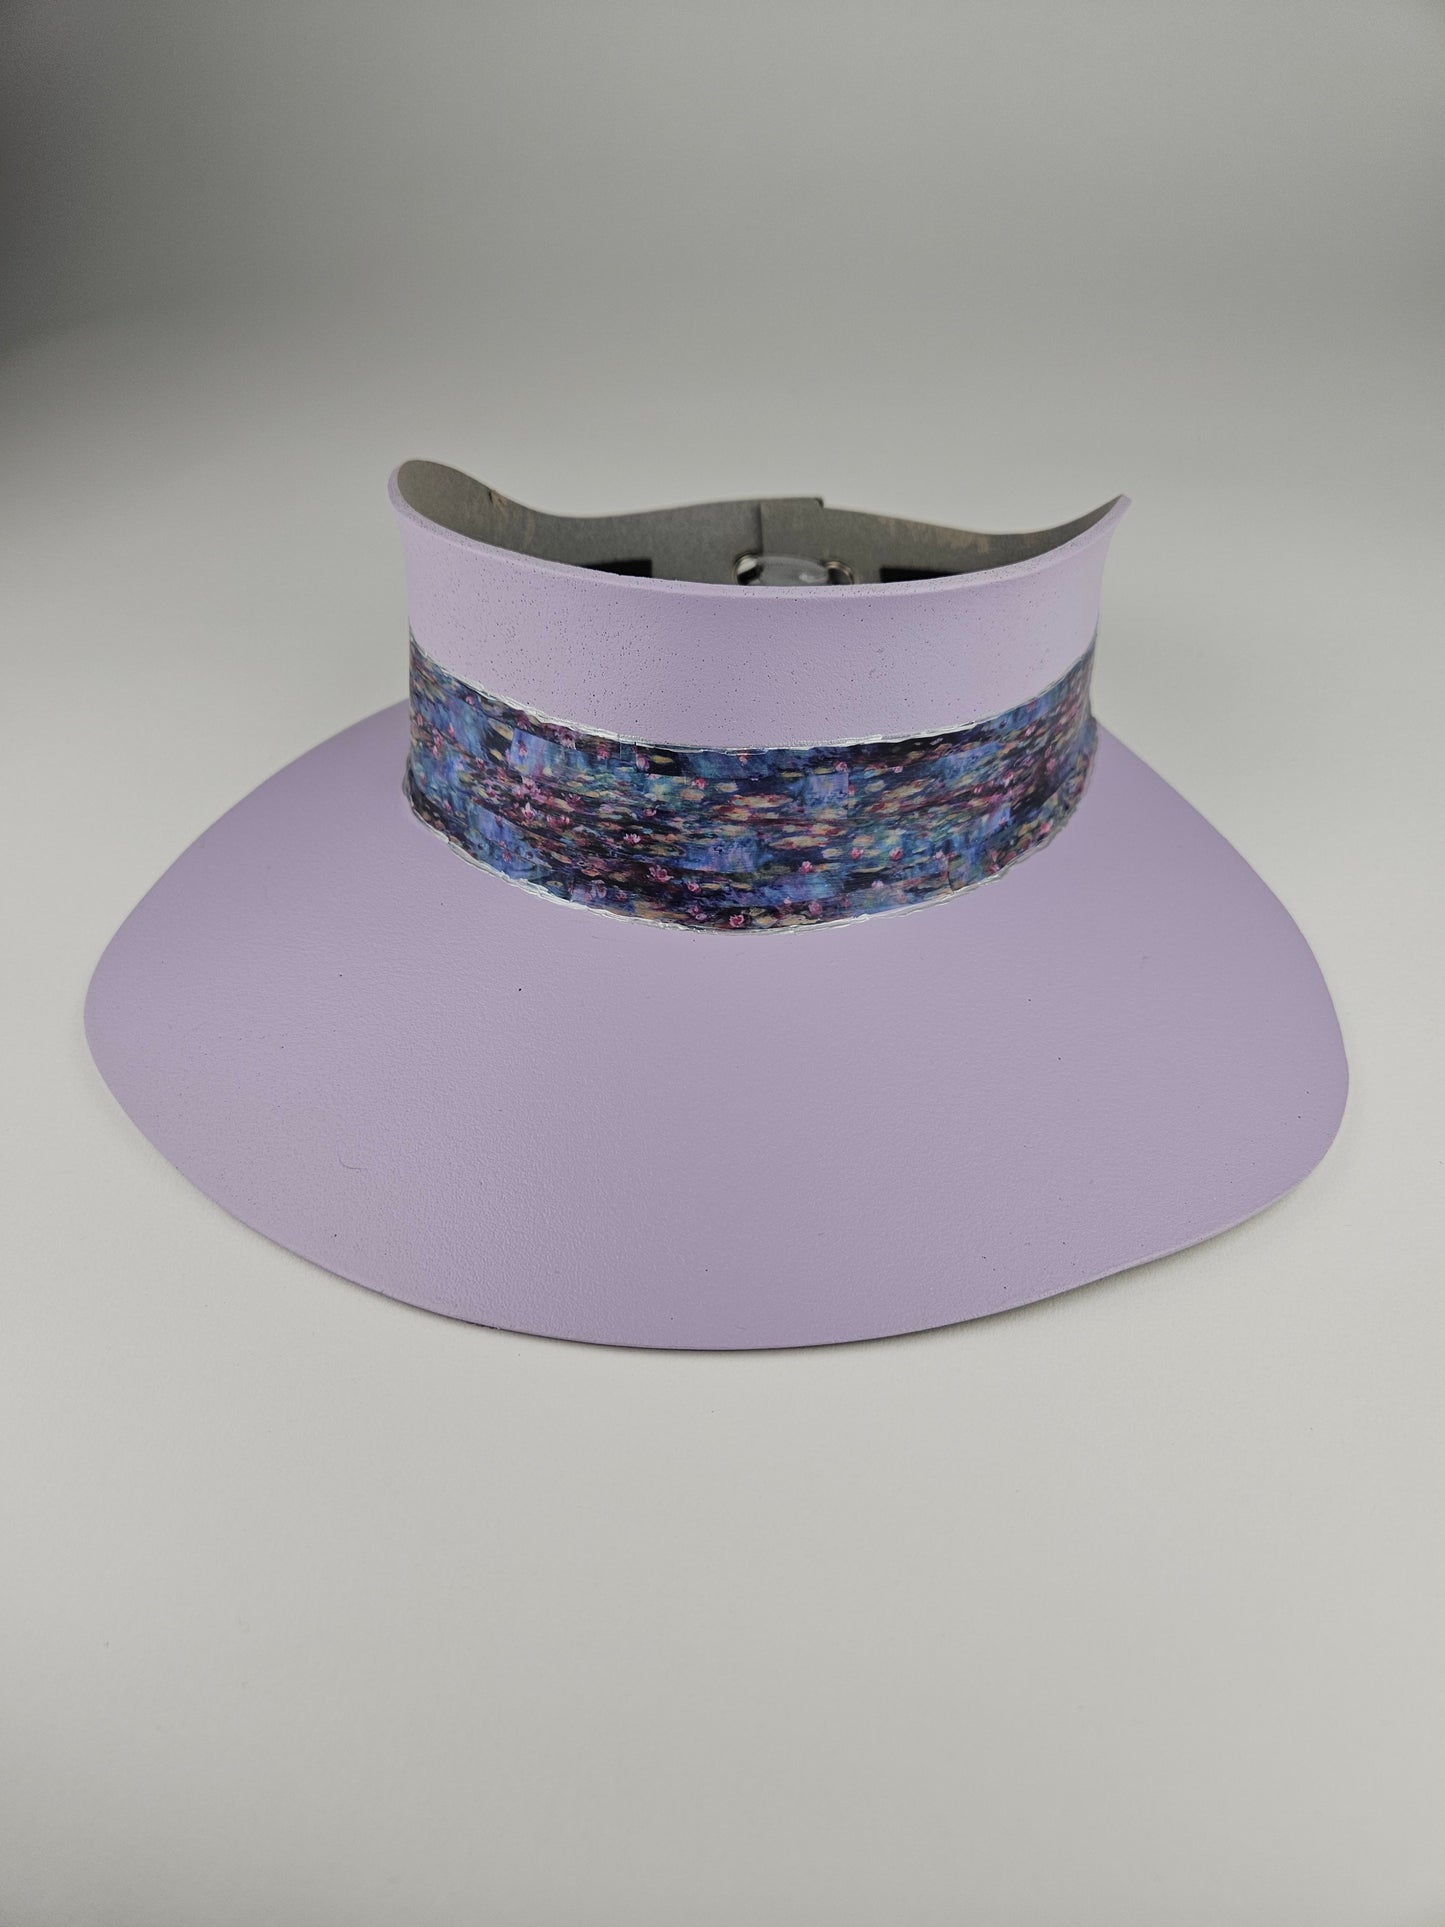 Tall Lilac Purple Audrey Sun Visor Hat with Elegant Multicolor Monet Style Band: 1950s, Walks, Brunch, Asian, Golf, Summer, Church, No Headache, Pool, Beach